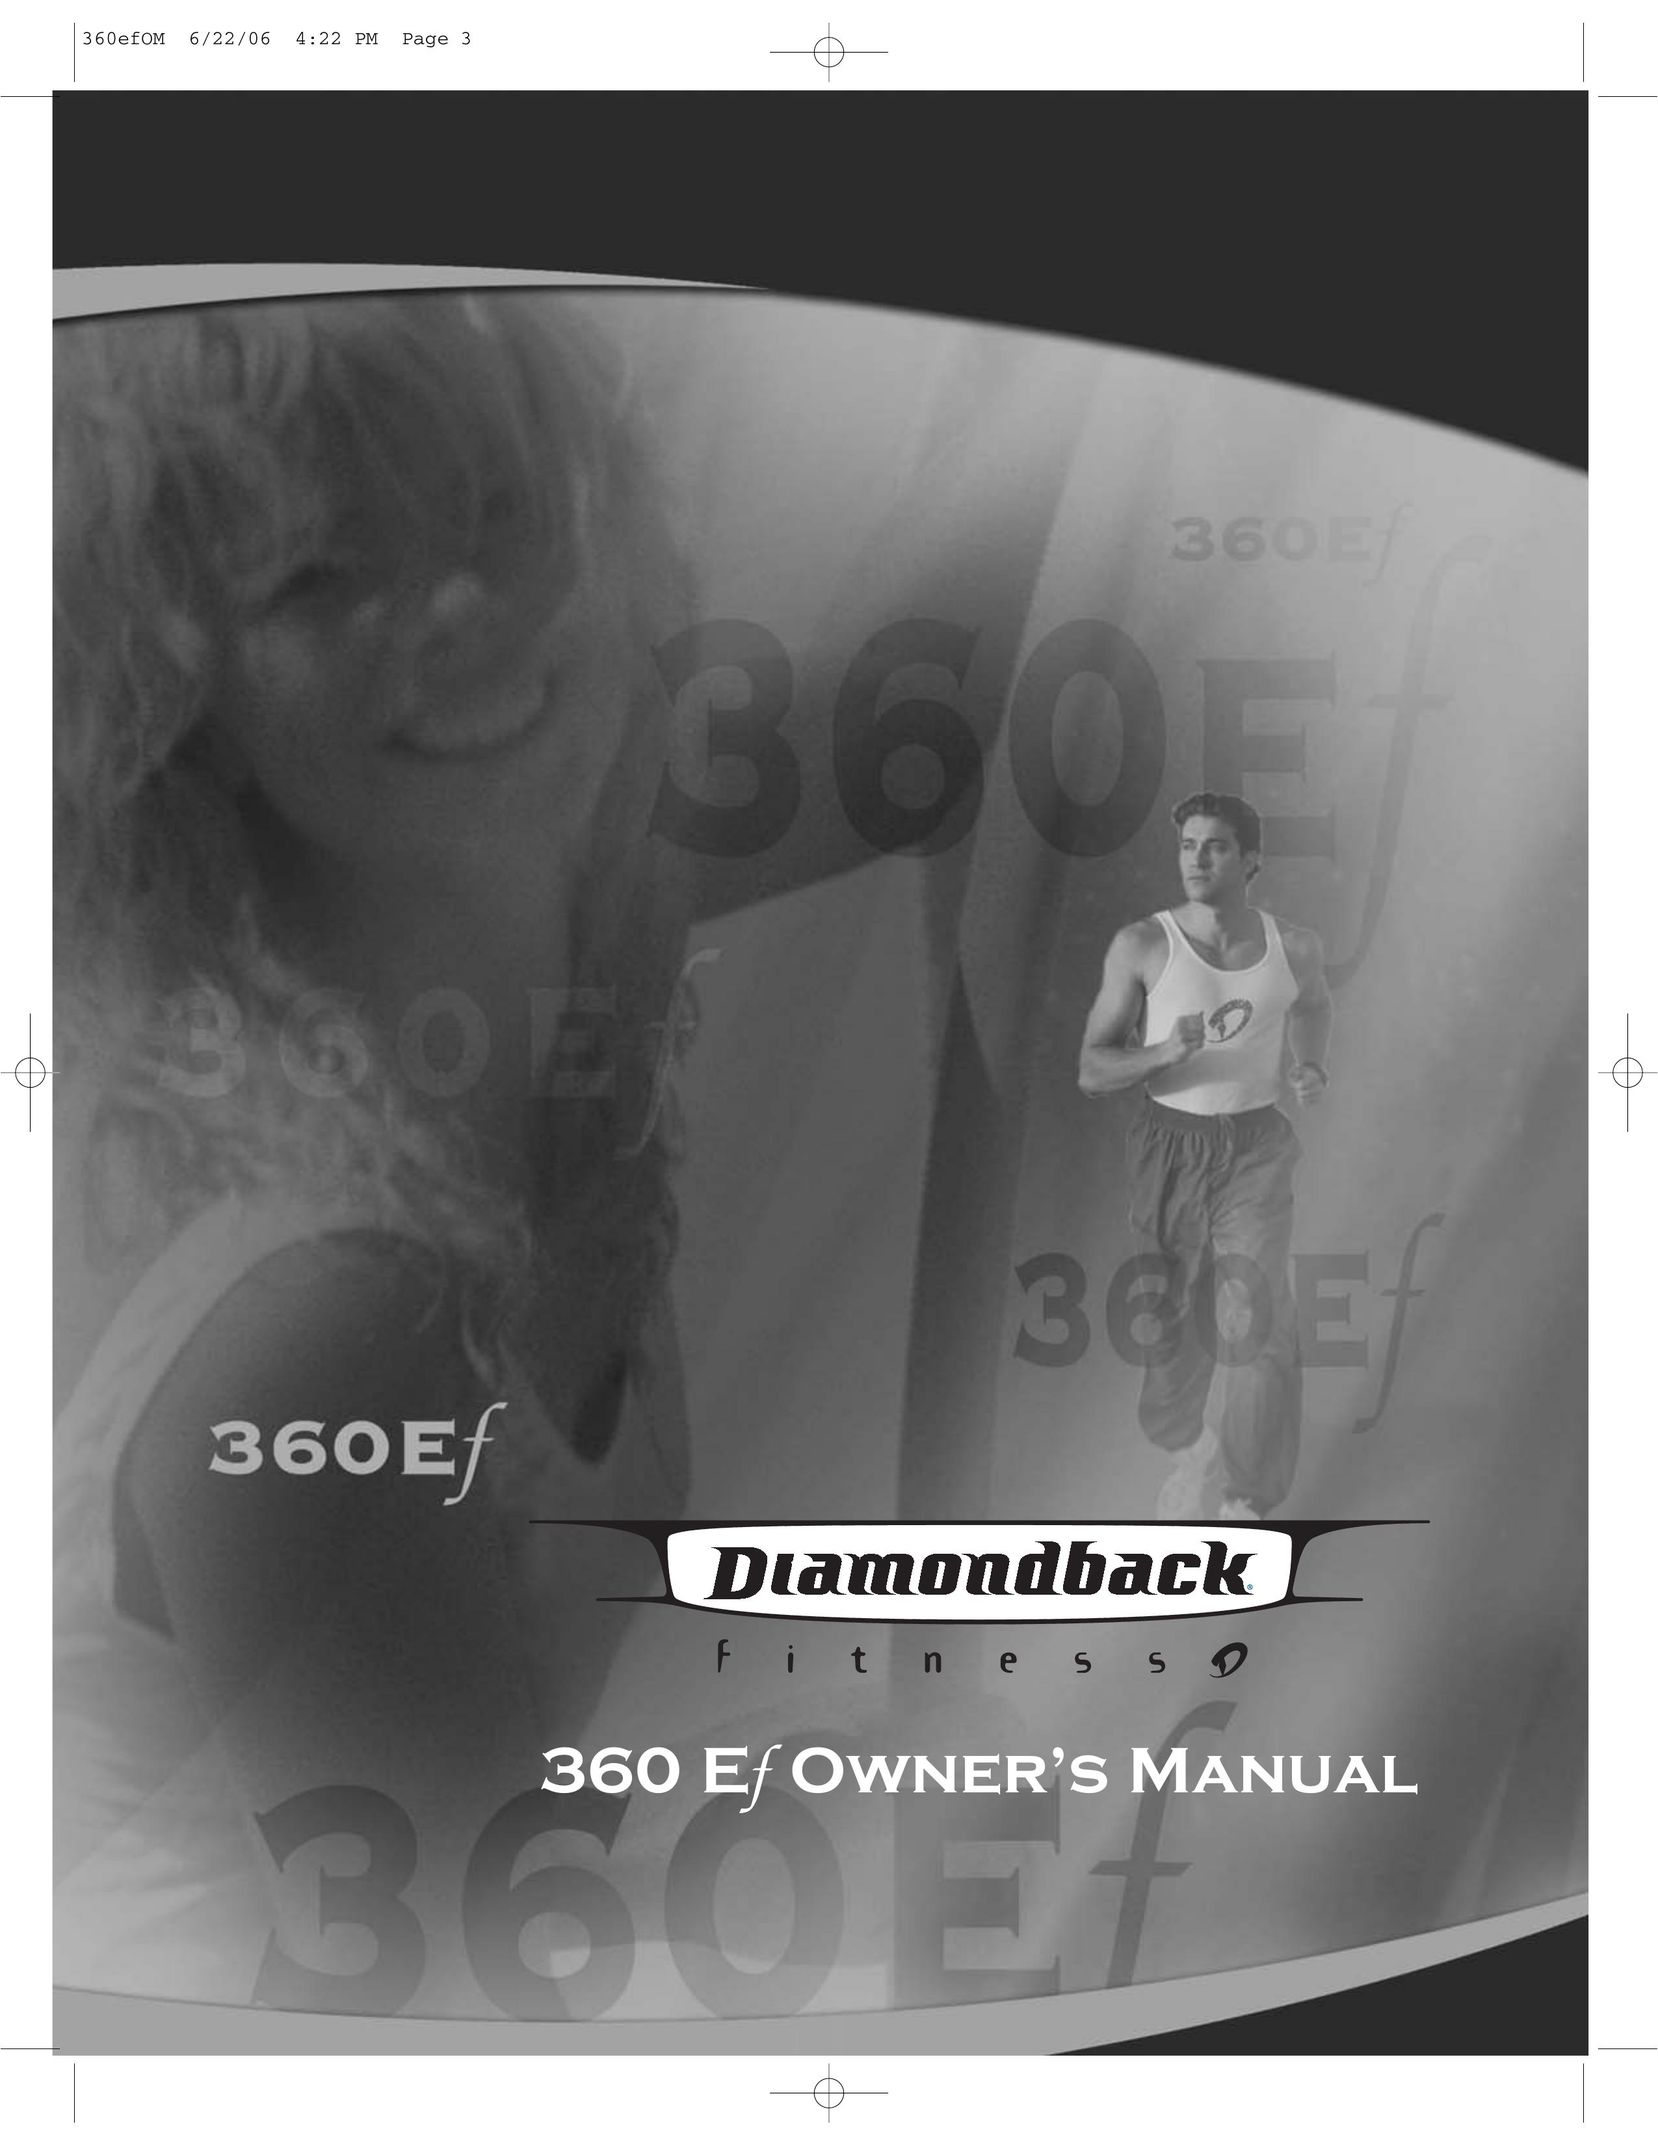 Diamondback 360 Ef Home Gym User Manual